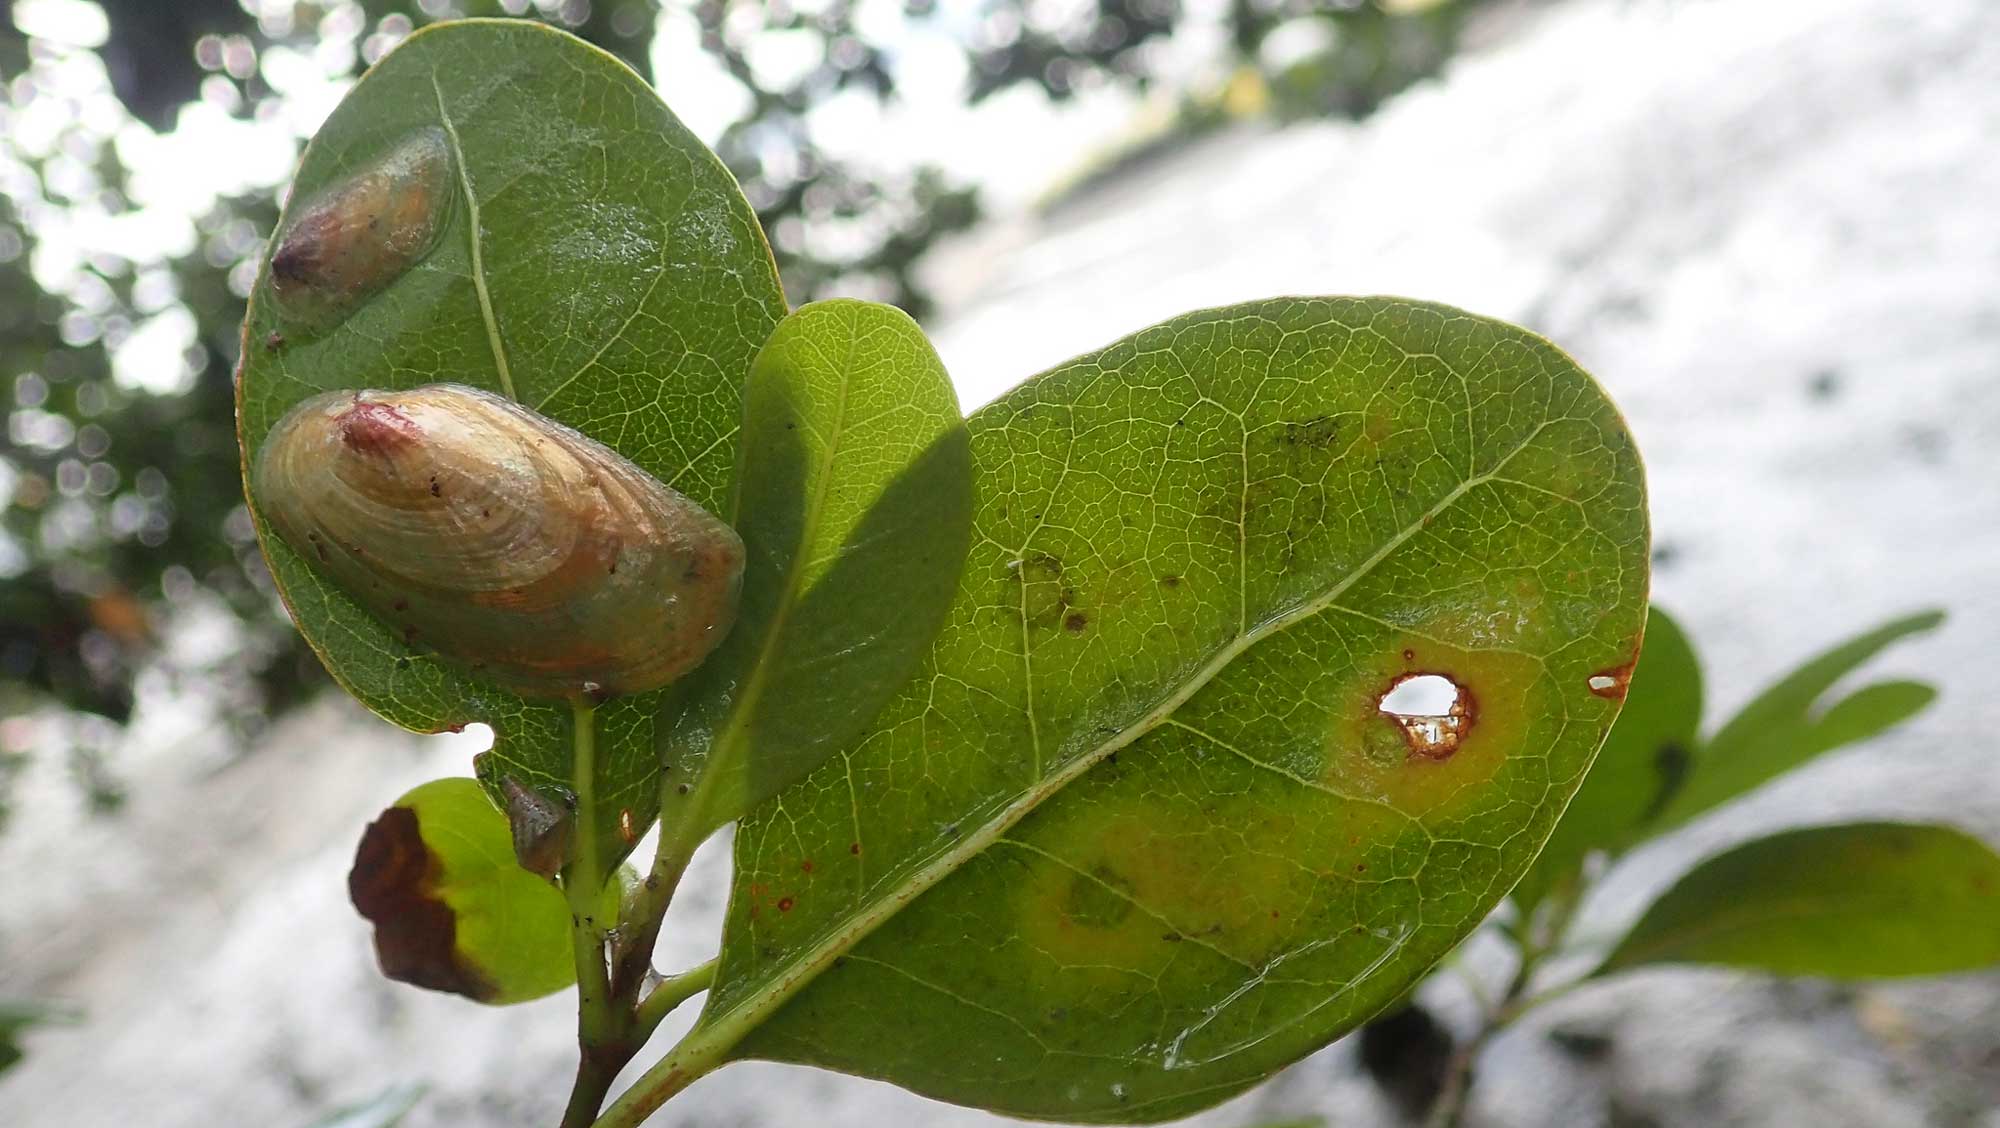 Photograph of the terrestrial snail Enigmonia aenigmatica.